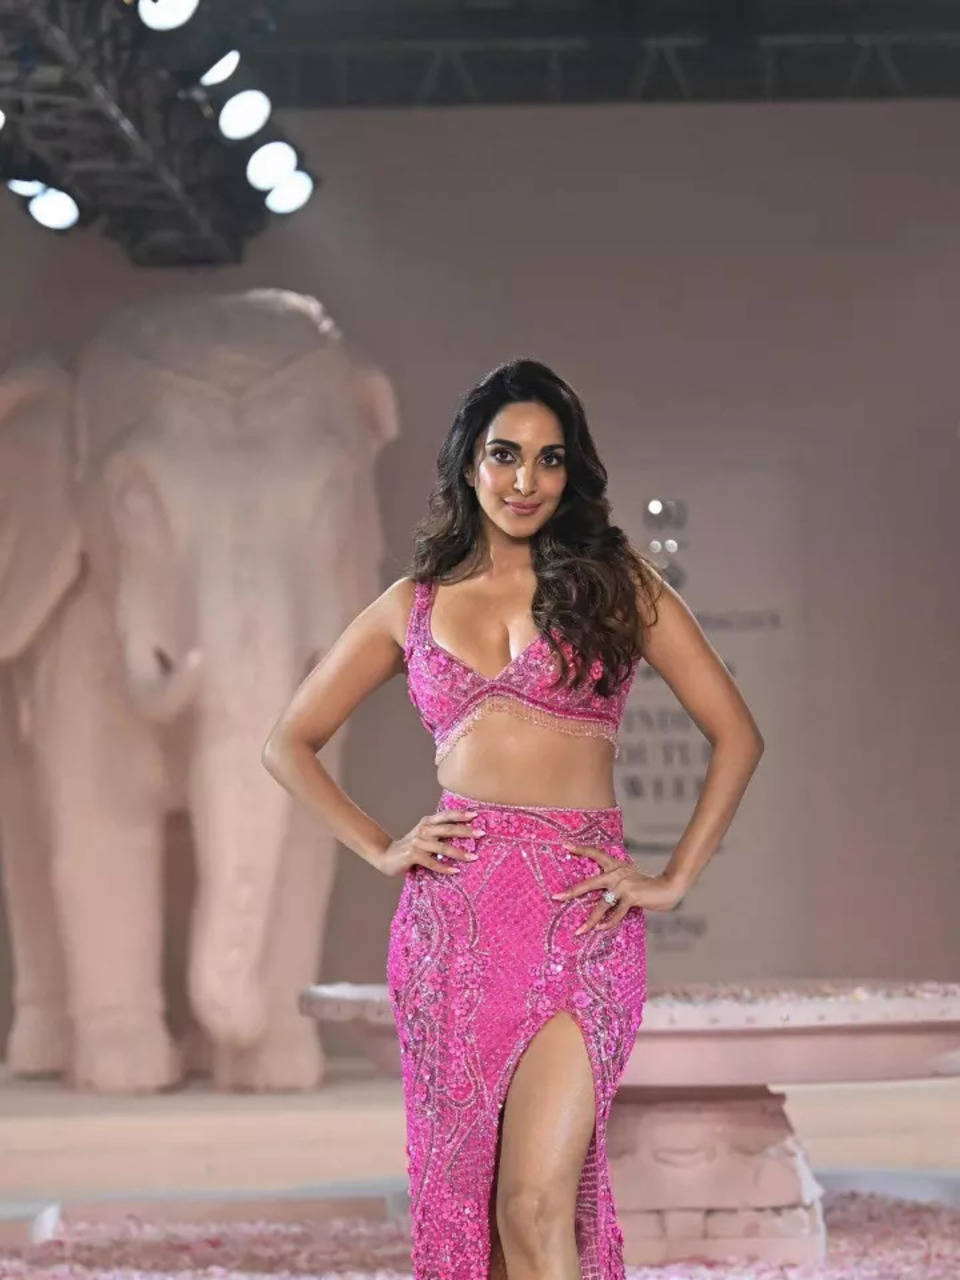 Kiara Advani channels inner Barbie on the ramp in shimmery pink attire